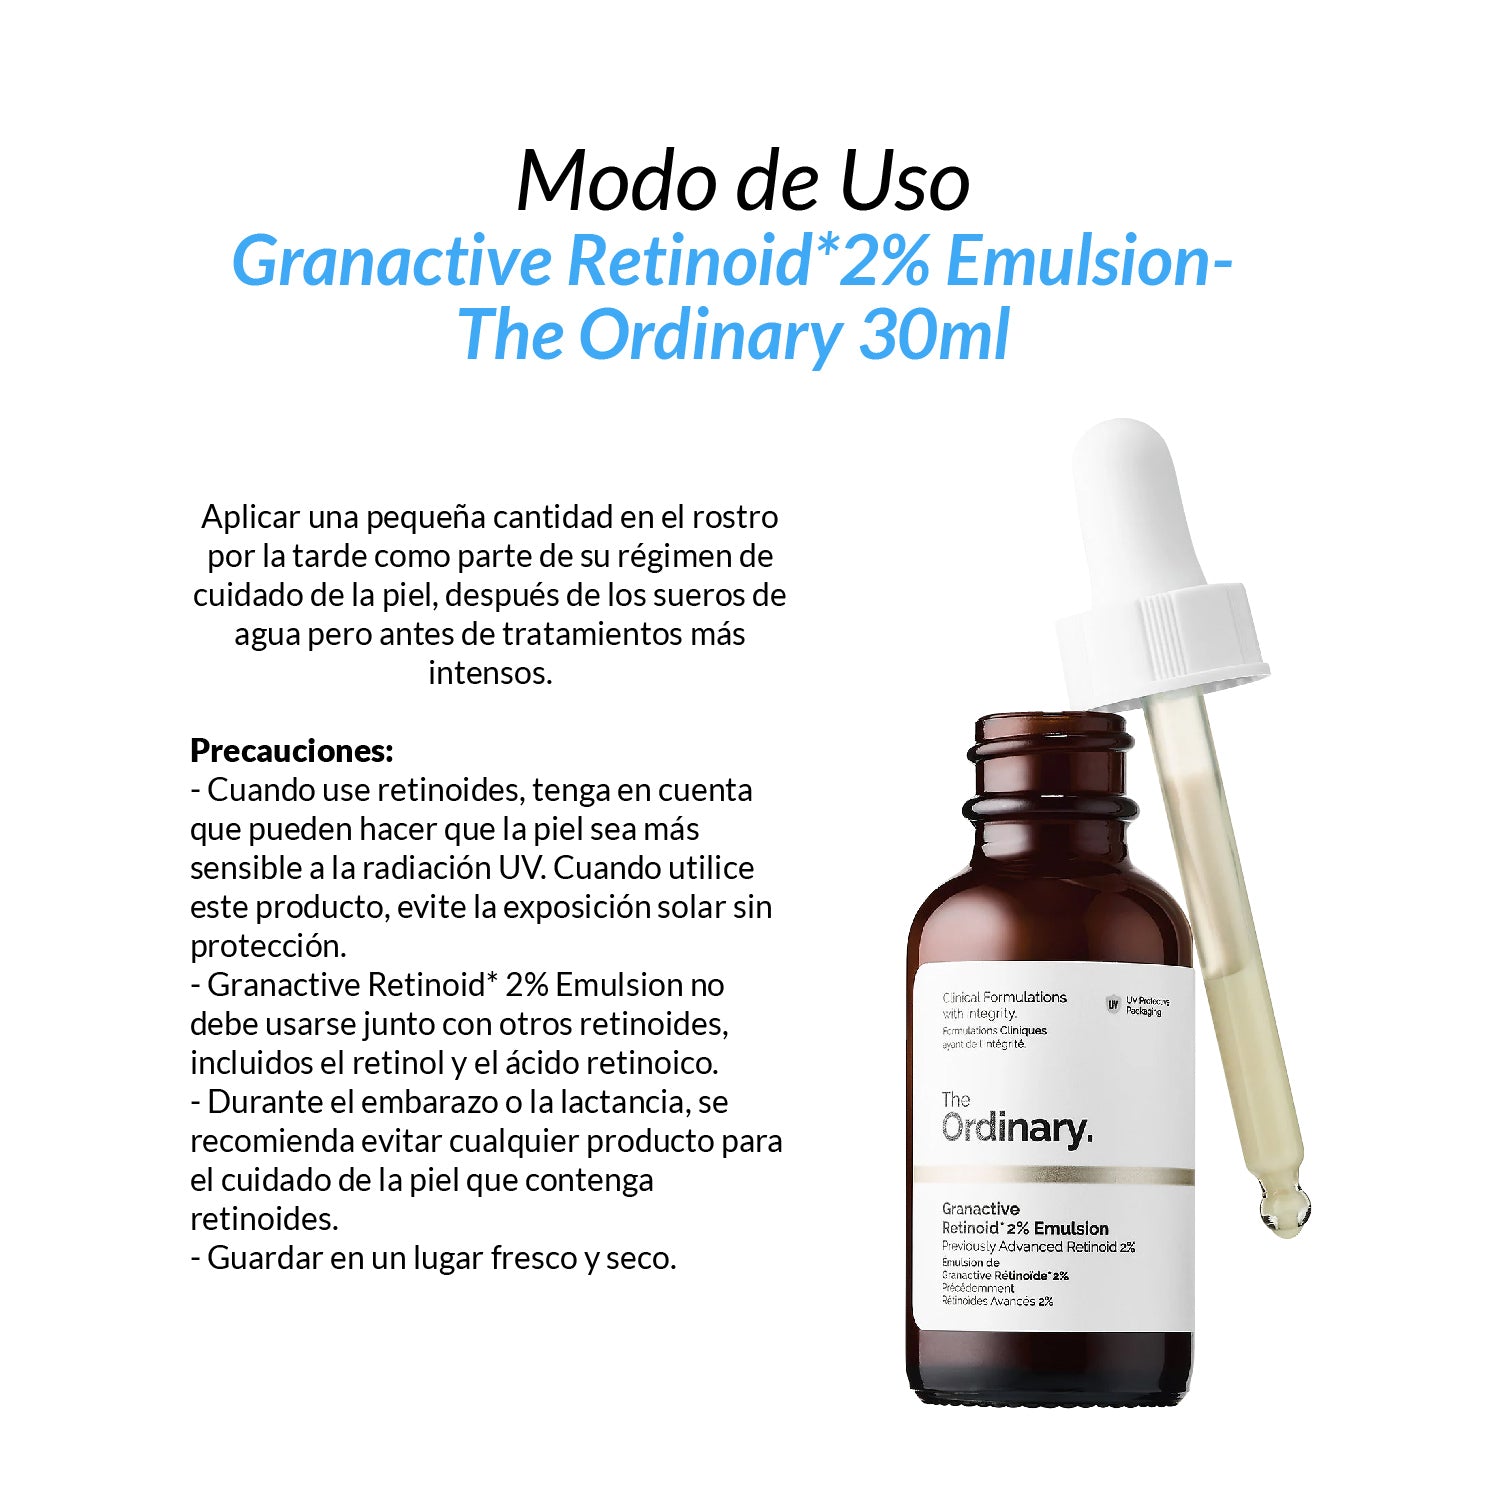 Granactive Retinoid*2% Emulsion - The Ordinary 30ml